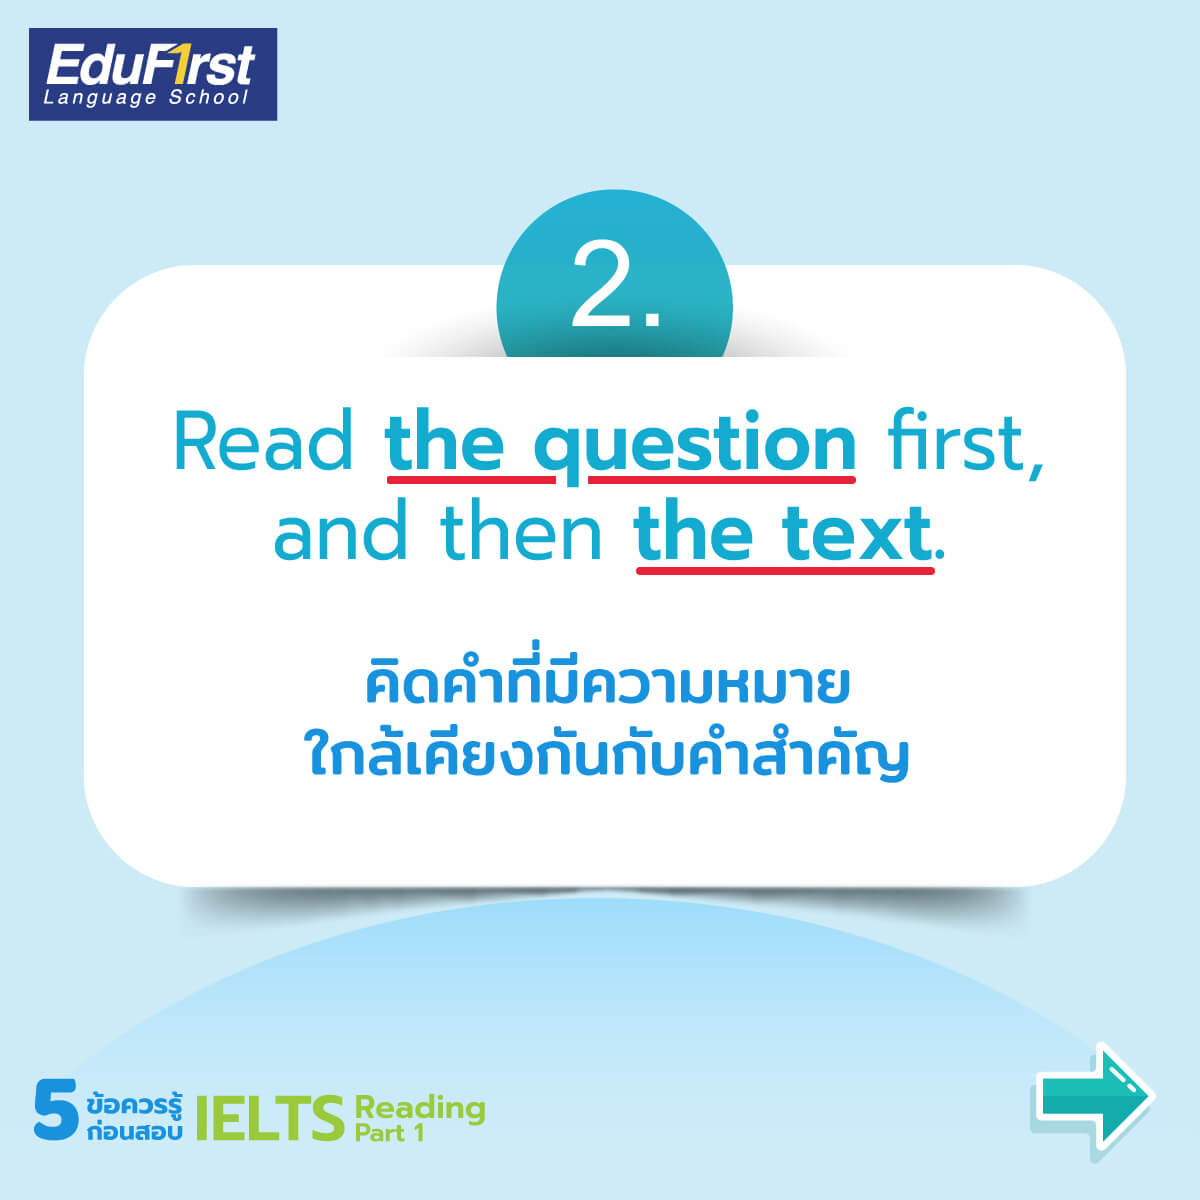 2. Read the question first, and then the text.<br />
อ่านคำถามก่อน แล้วจึงอ่านข้อความ<br />
